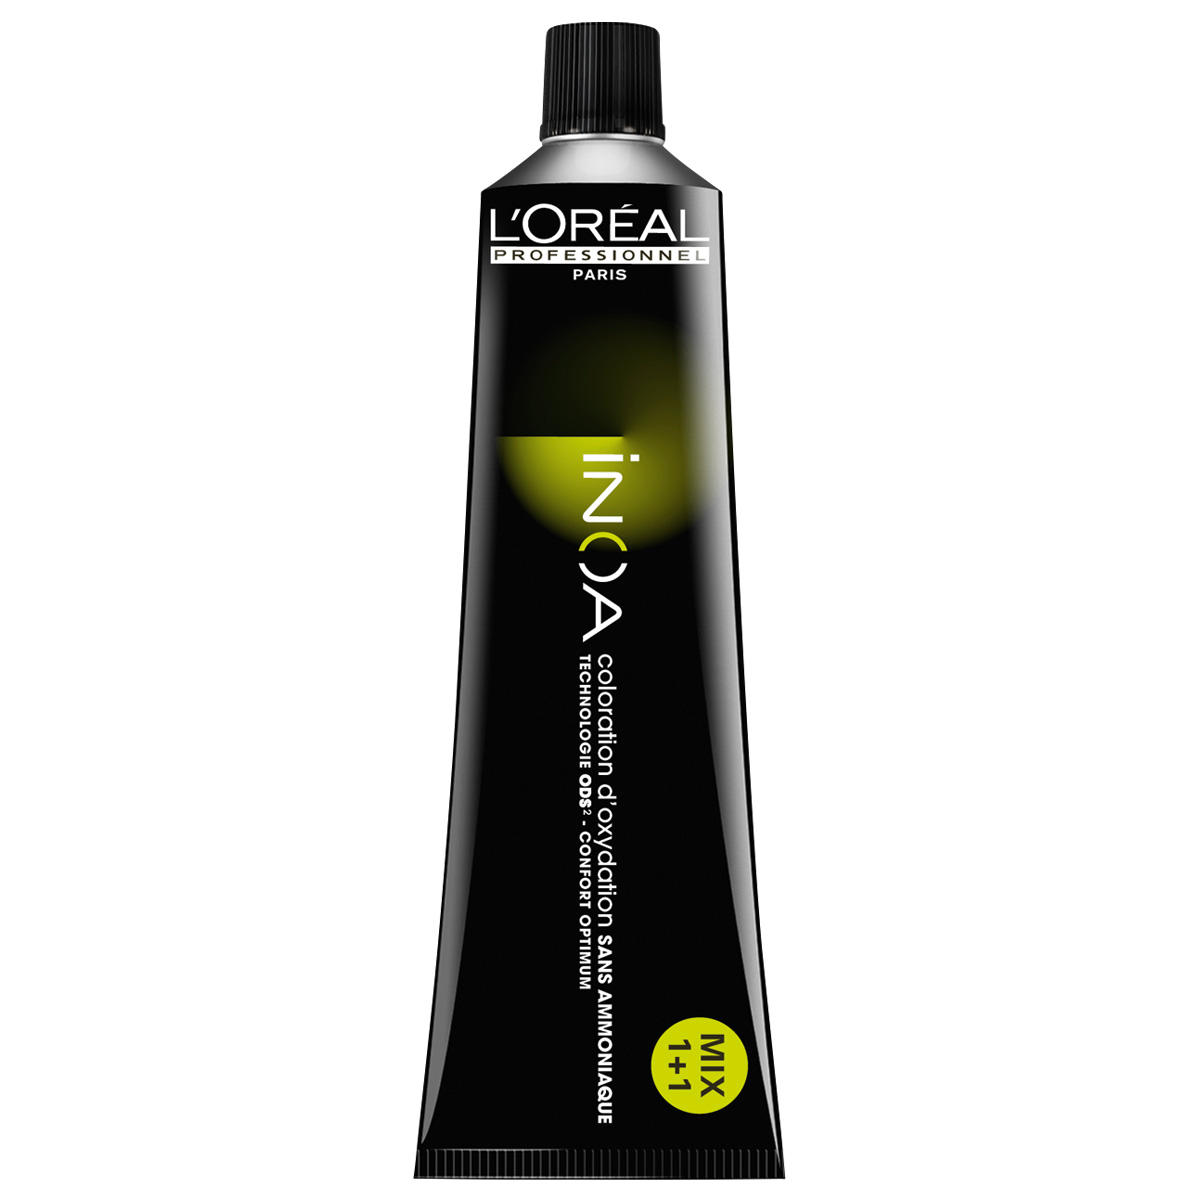 L'Oréal Professionnel Paris Coloration 7,43 Rubio medio cobrizo dorado, tubo 60 ml